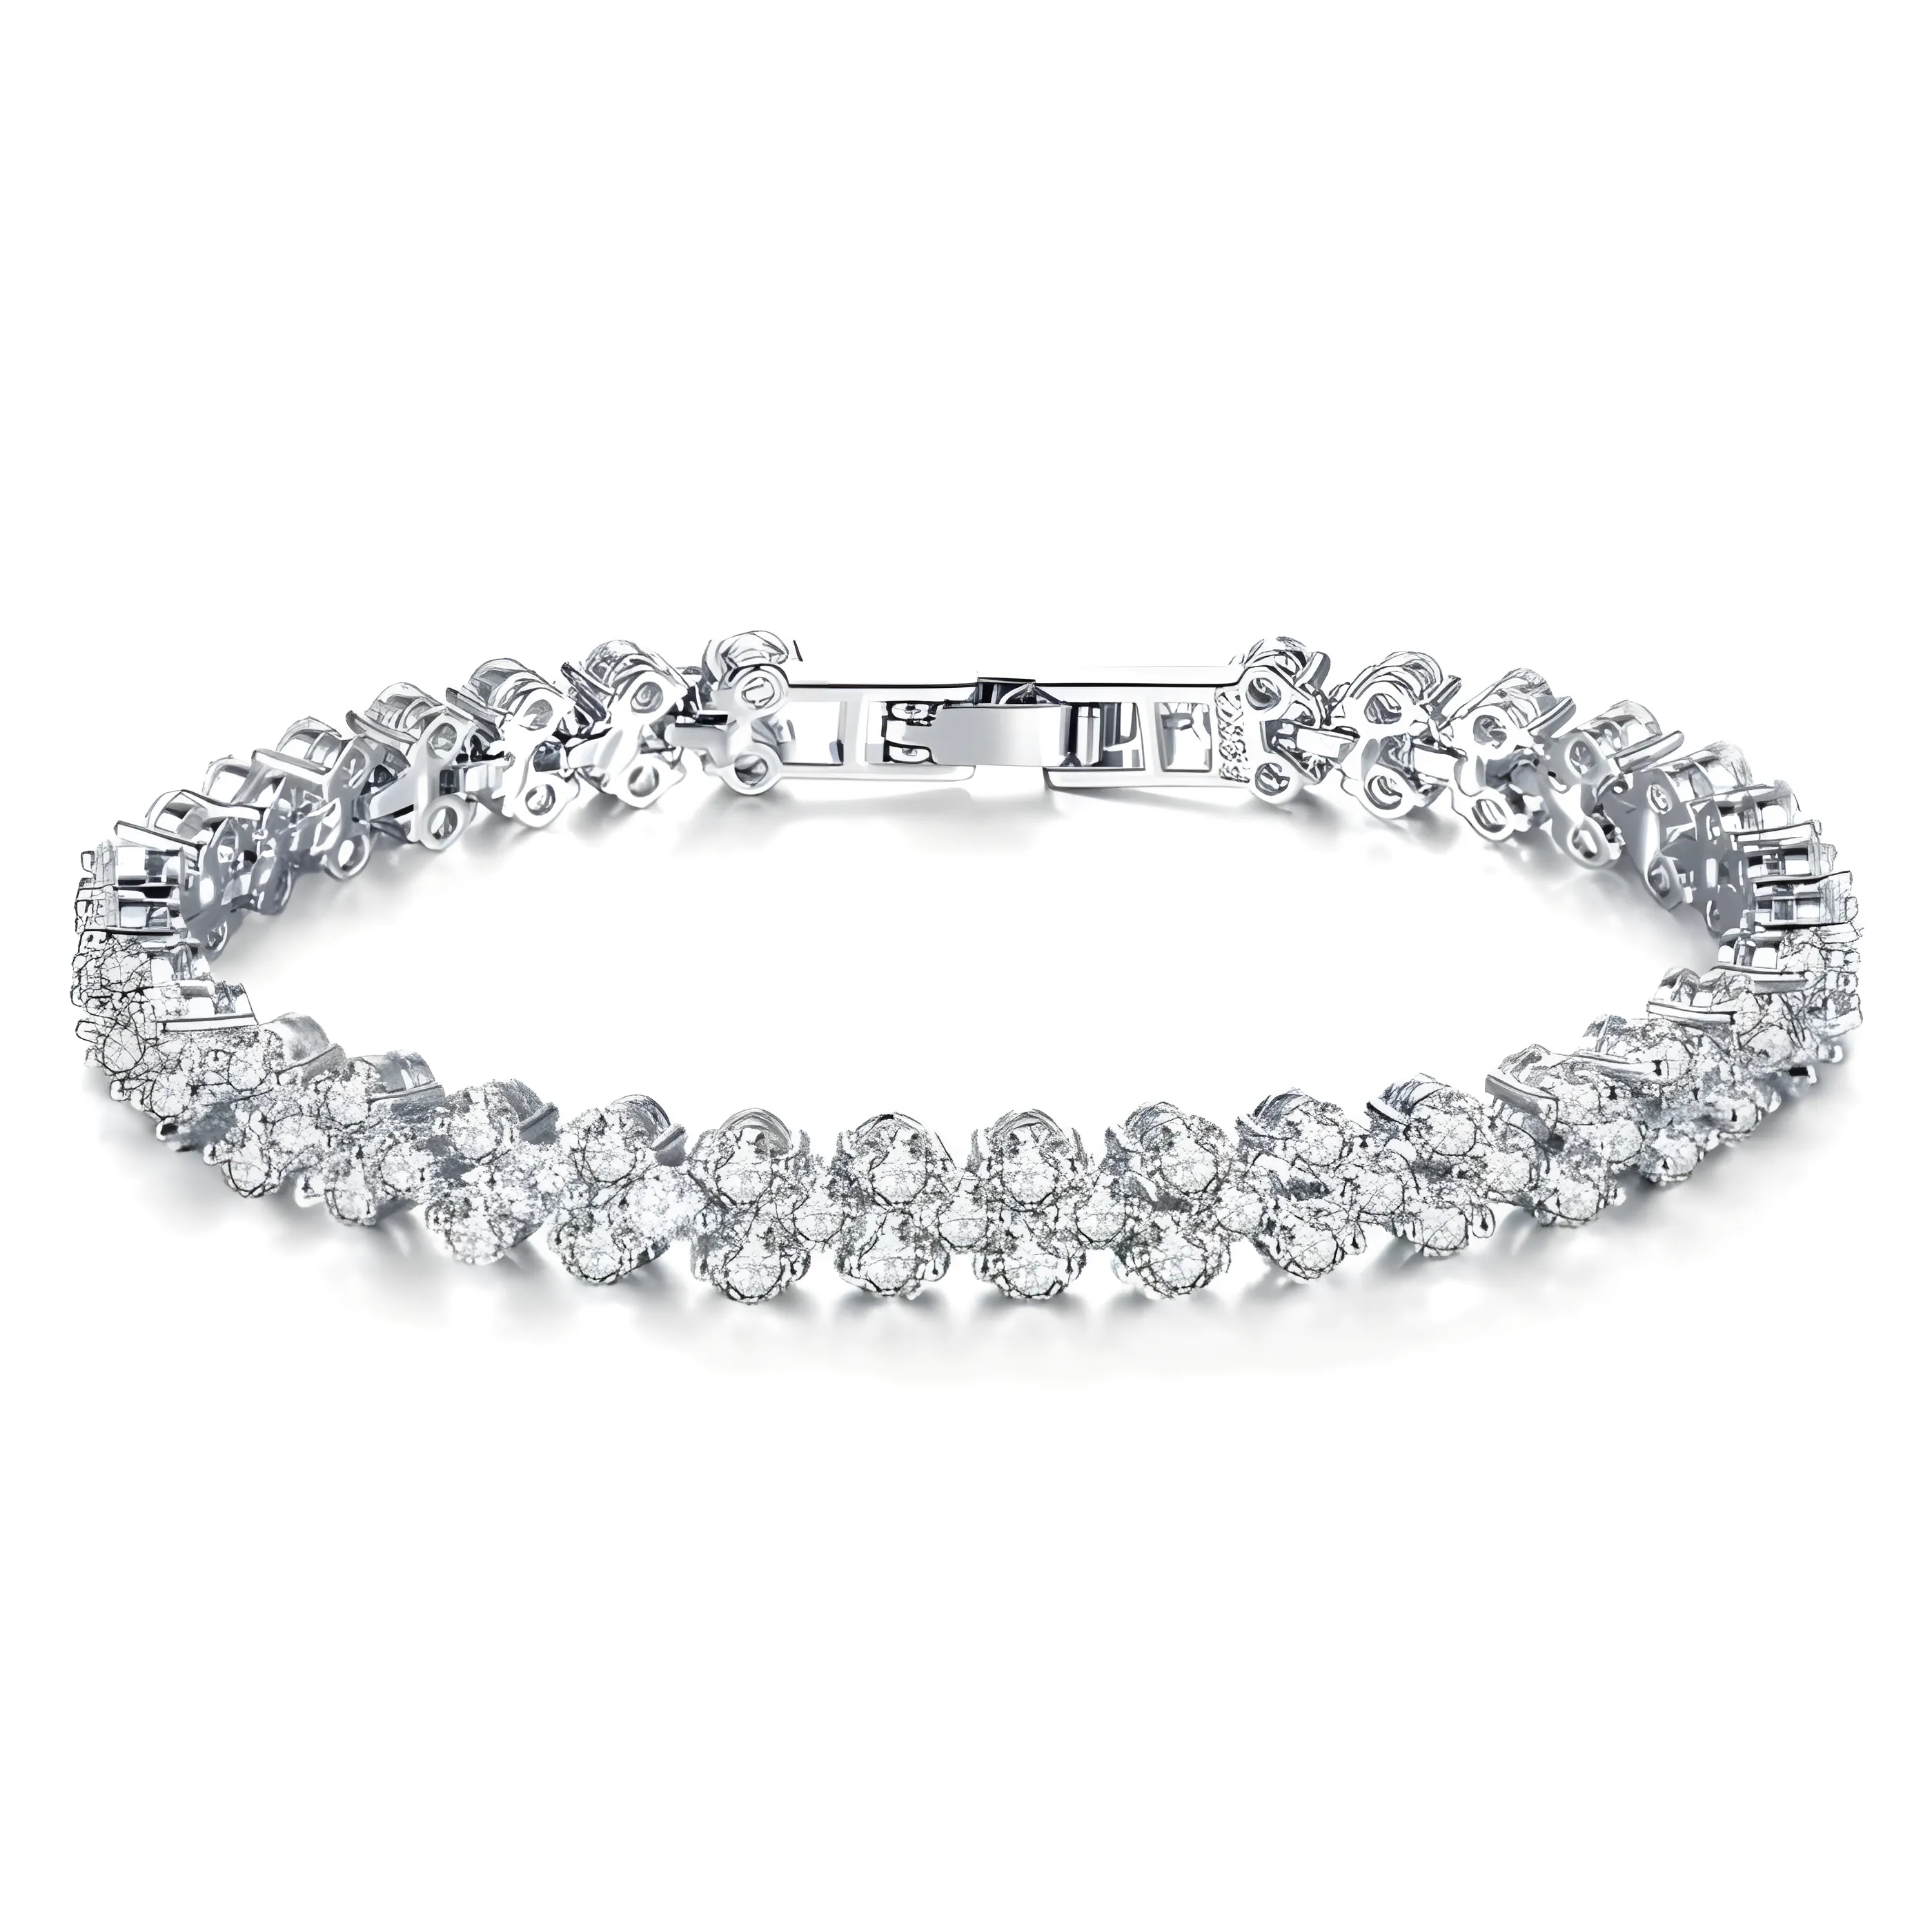 Free Ladies Silver Crystal Rhinestone Bangle Bracelet